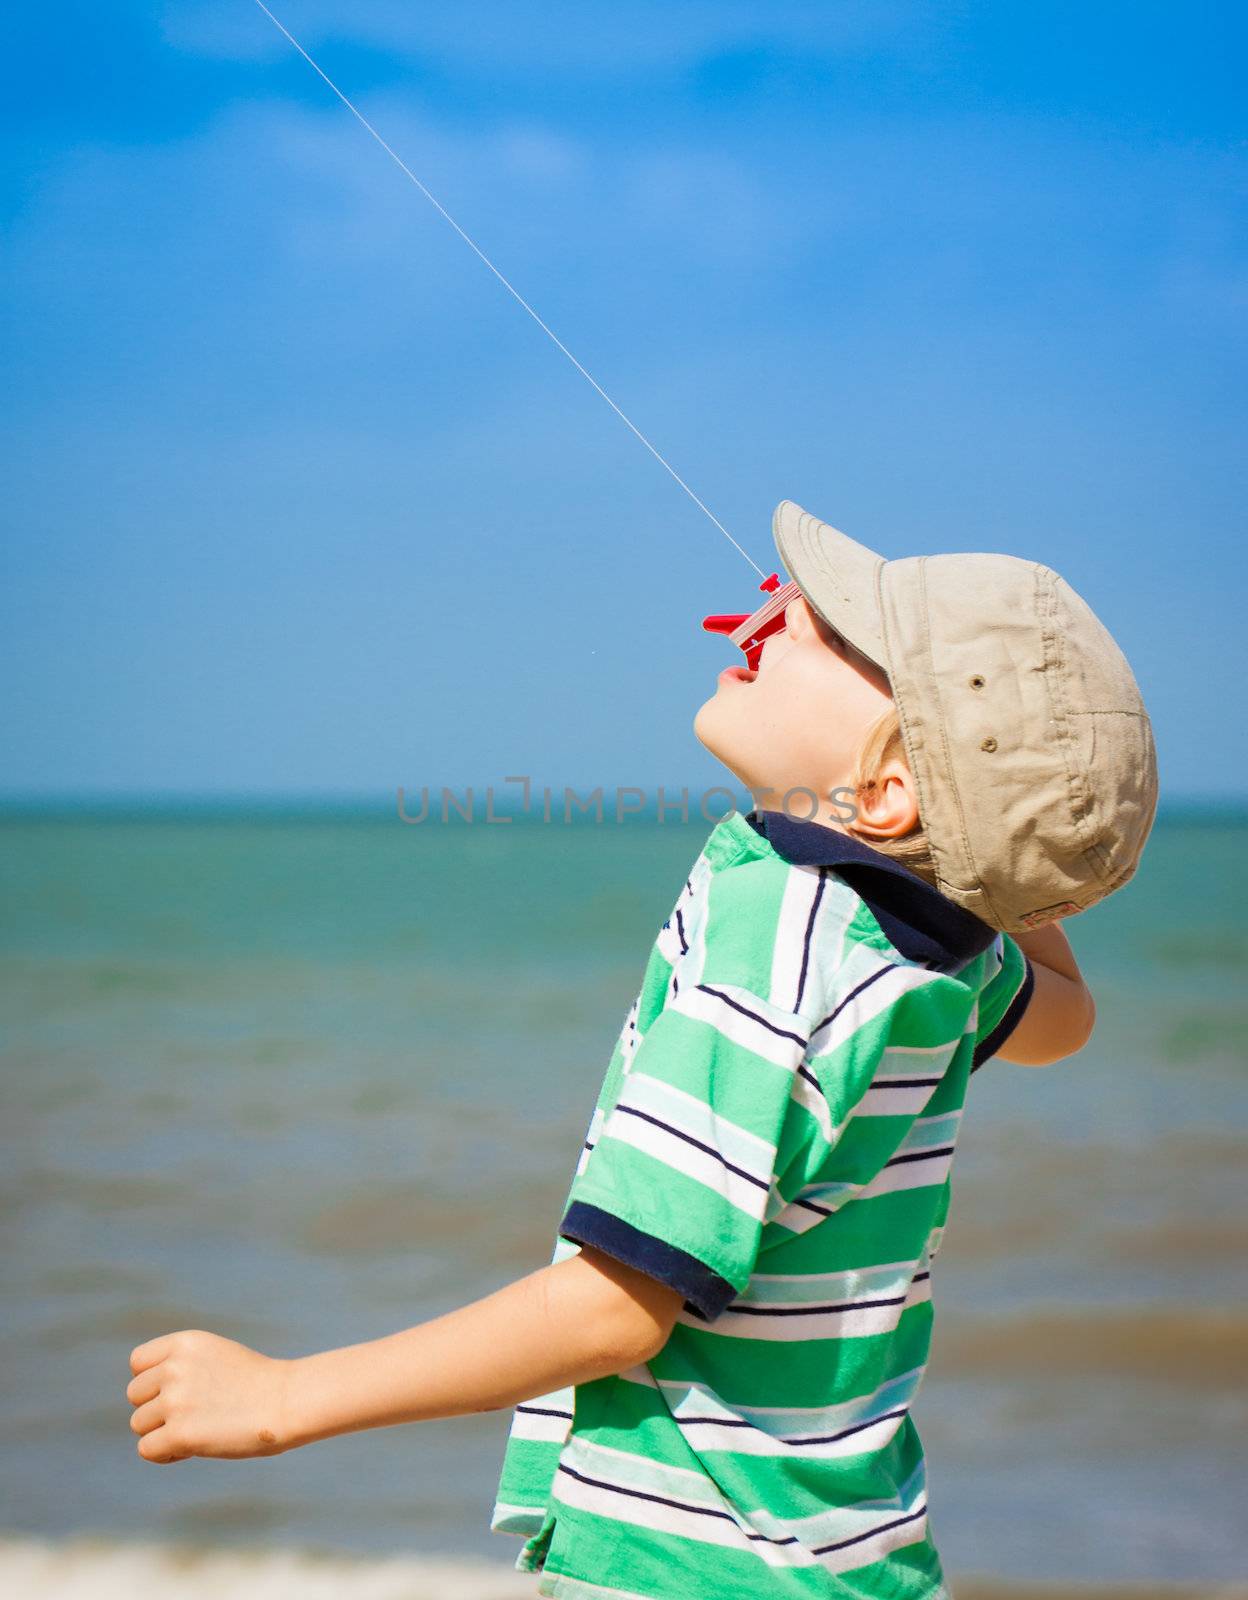 Boy flying kite at the beach by Jaykayl